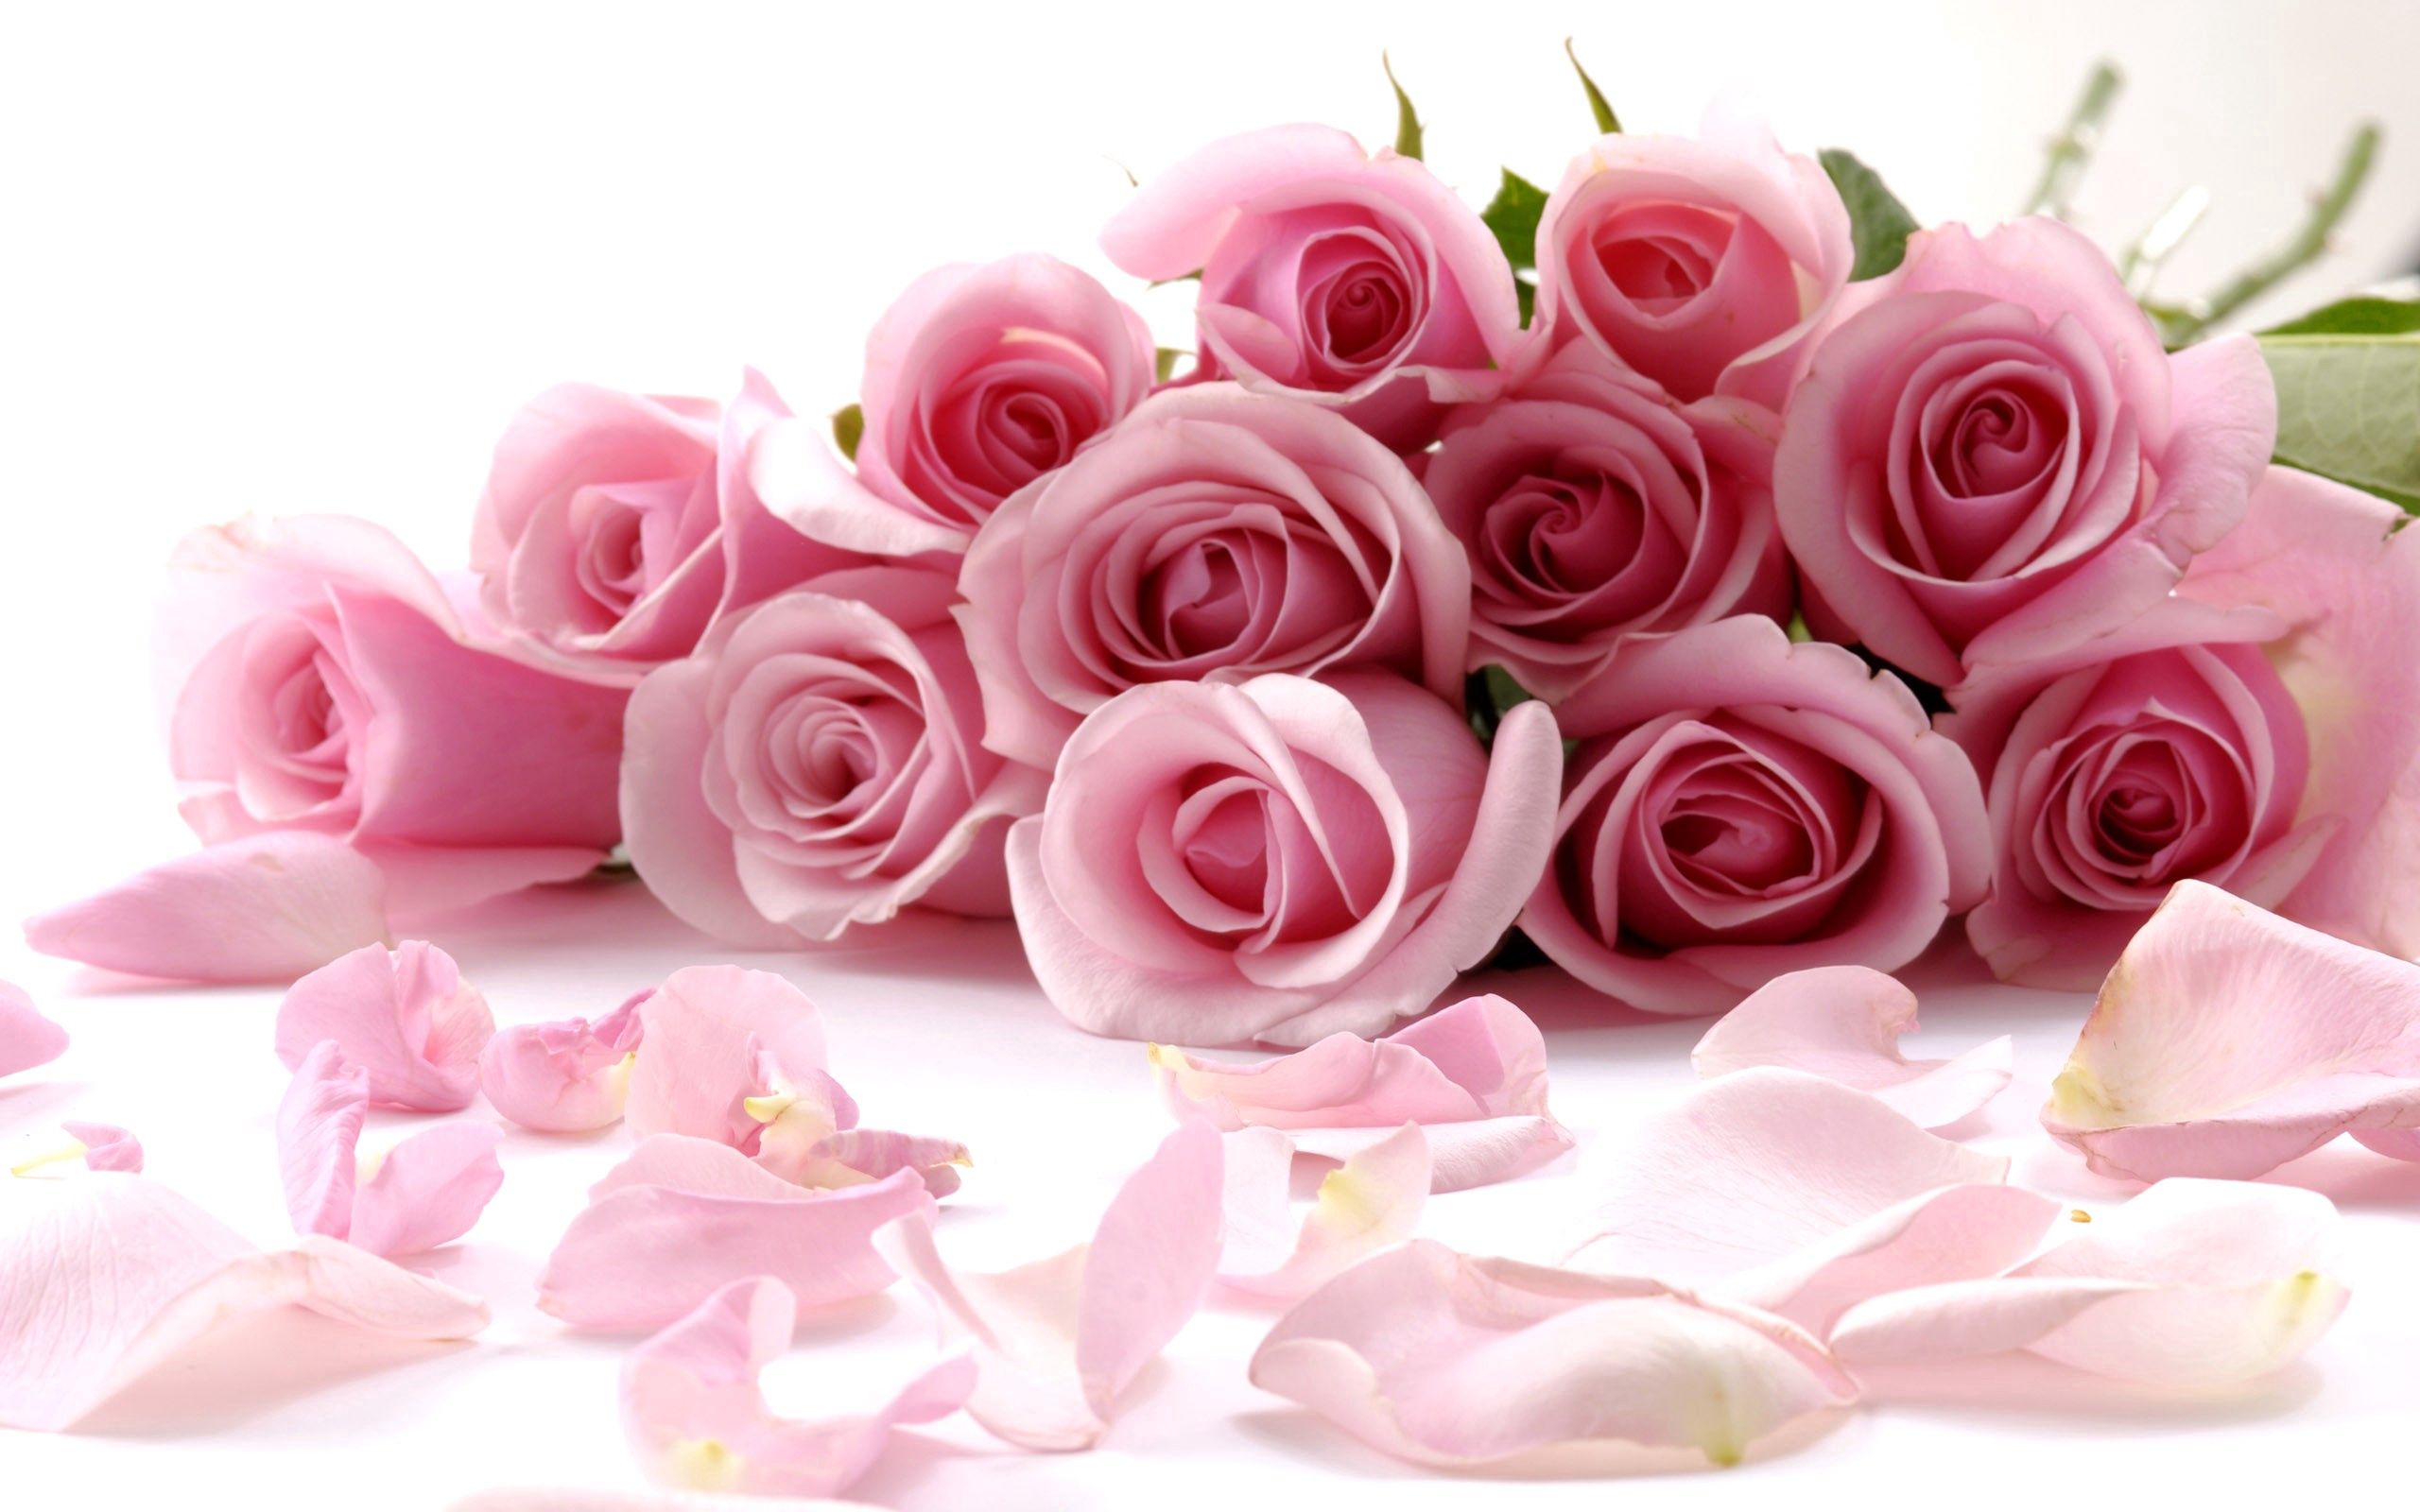 roses, miscellanea, miscellaneous, petals, bouquet 32K